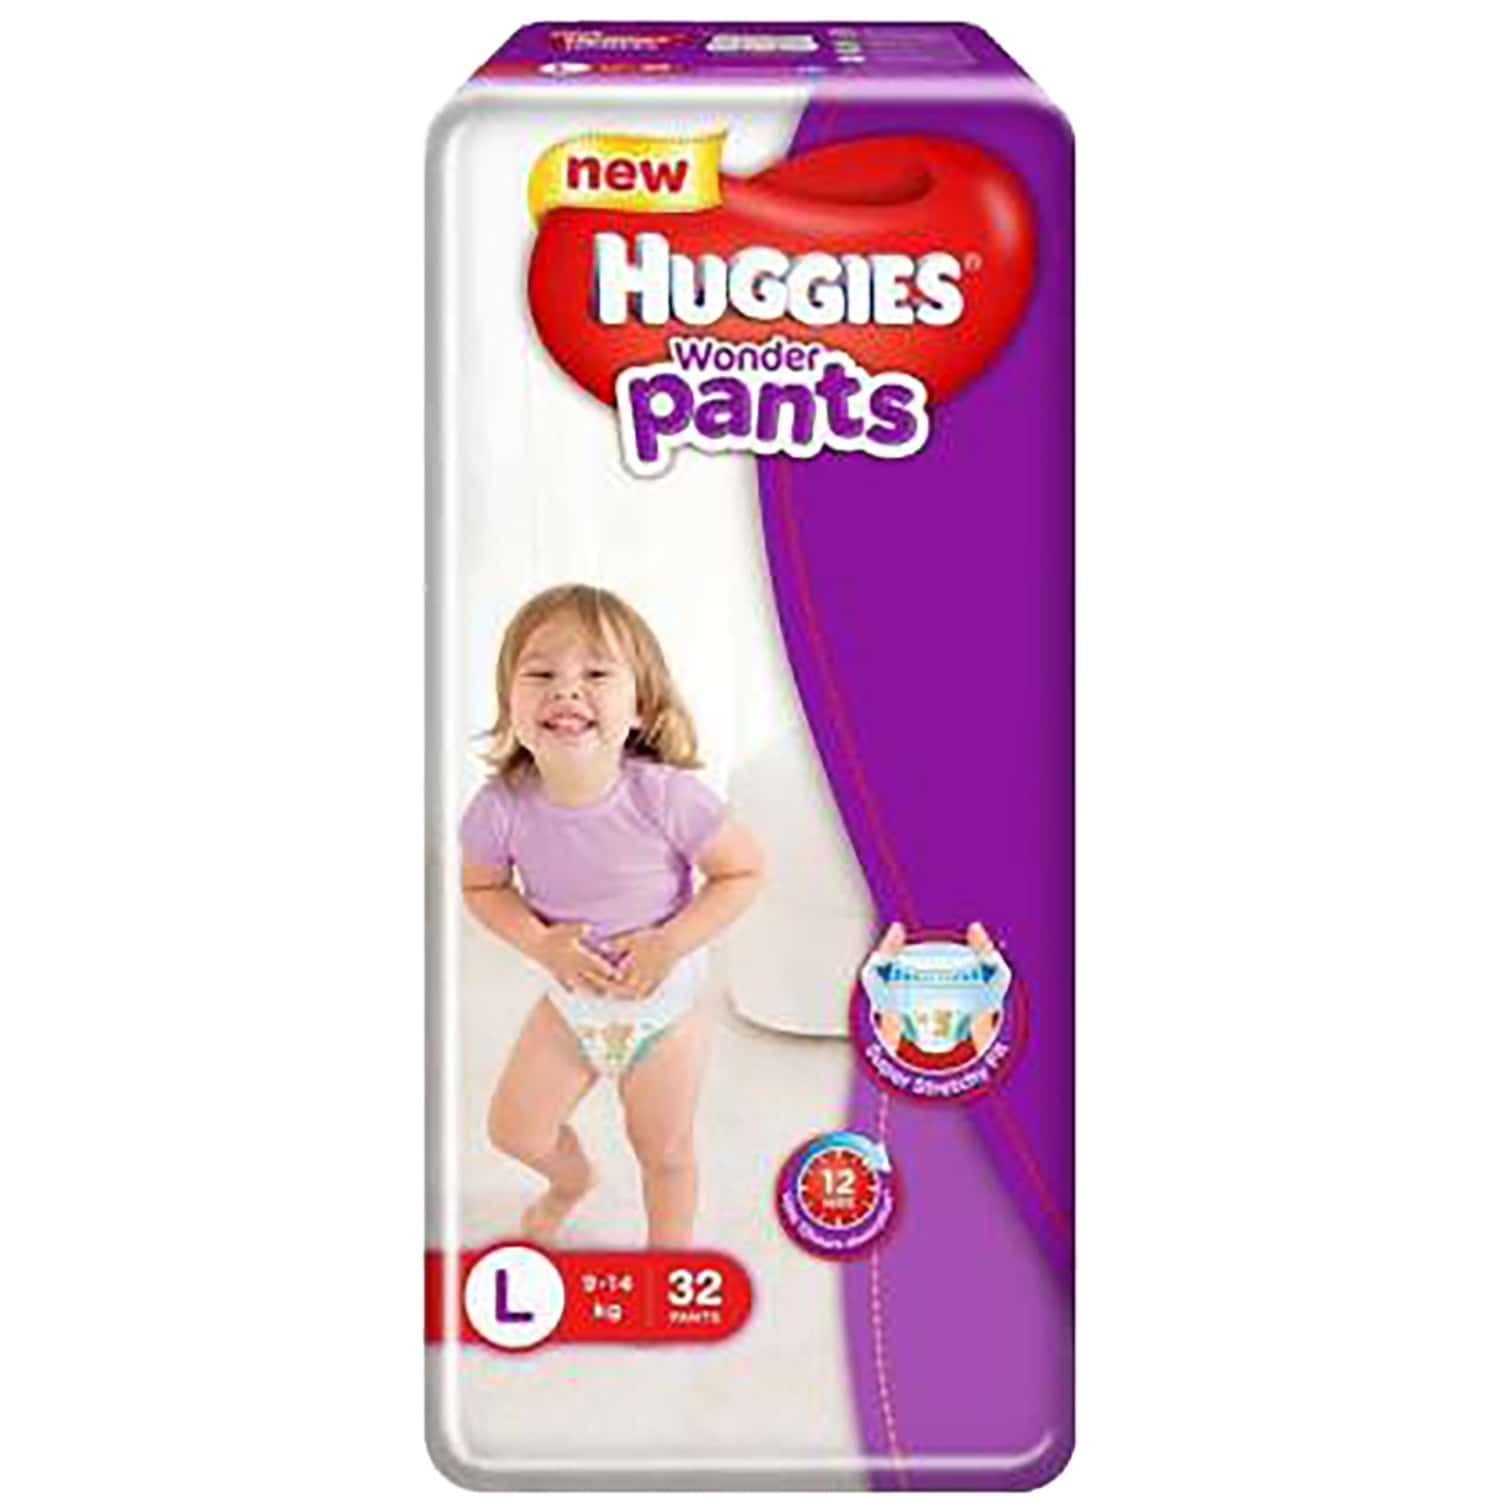 Huggies Wonder pants M38 - M - Buy 38 Huggies Pant Diapers | Flipkart.com-cheohanoi.vn